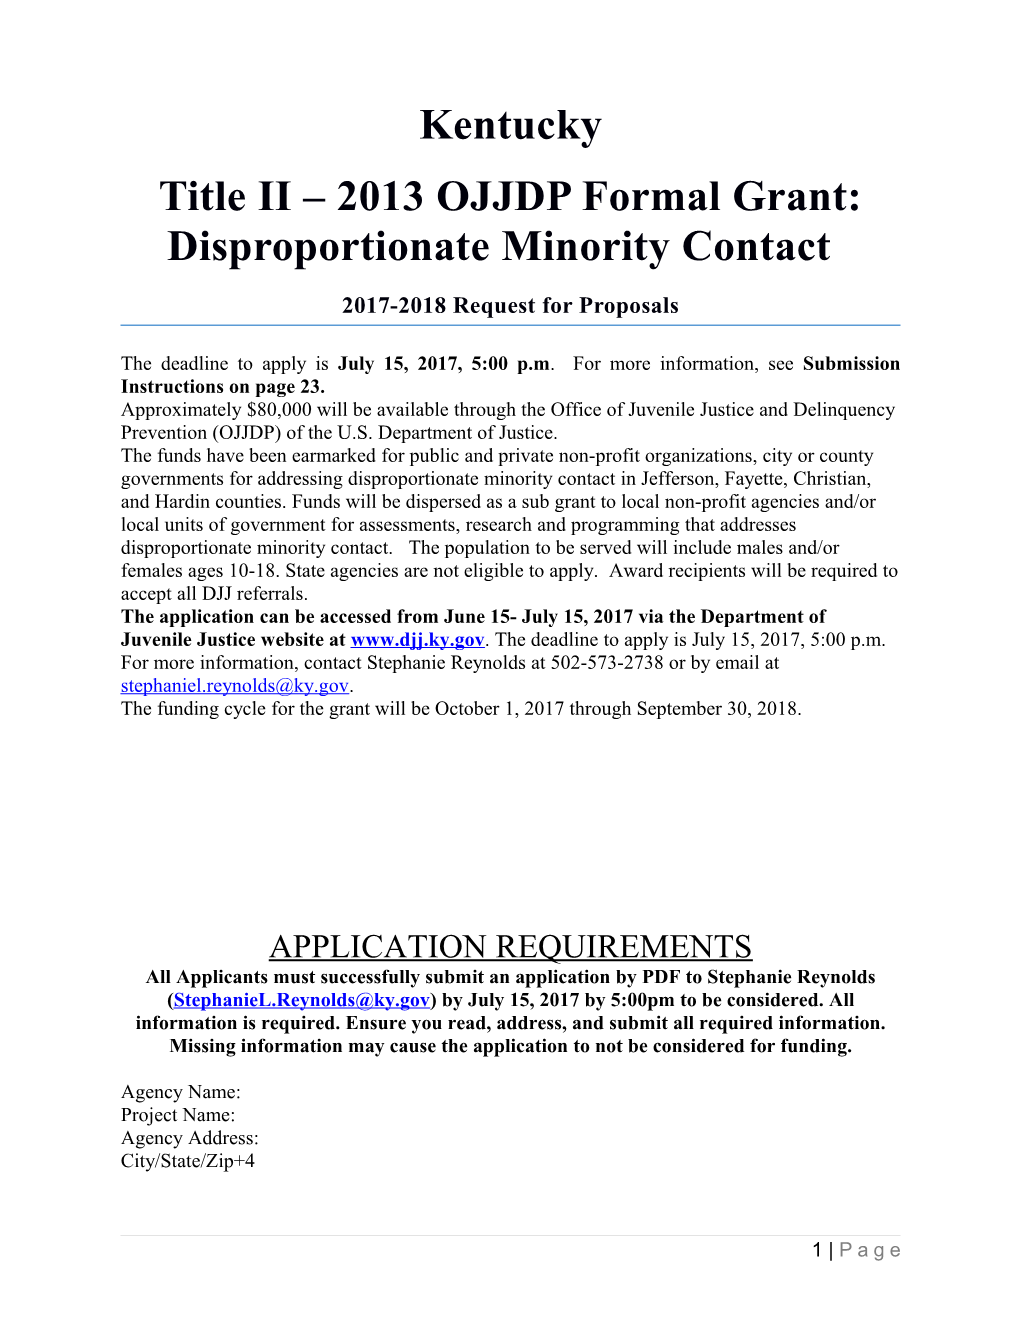 Title II 2013OJJDP Formal Grant: Disproportionate Minority Contact